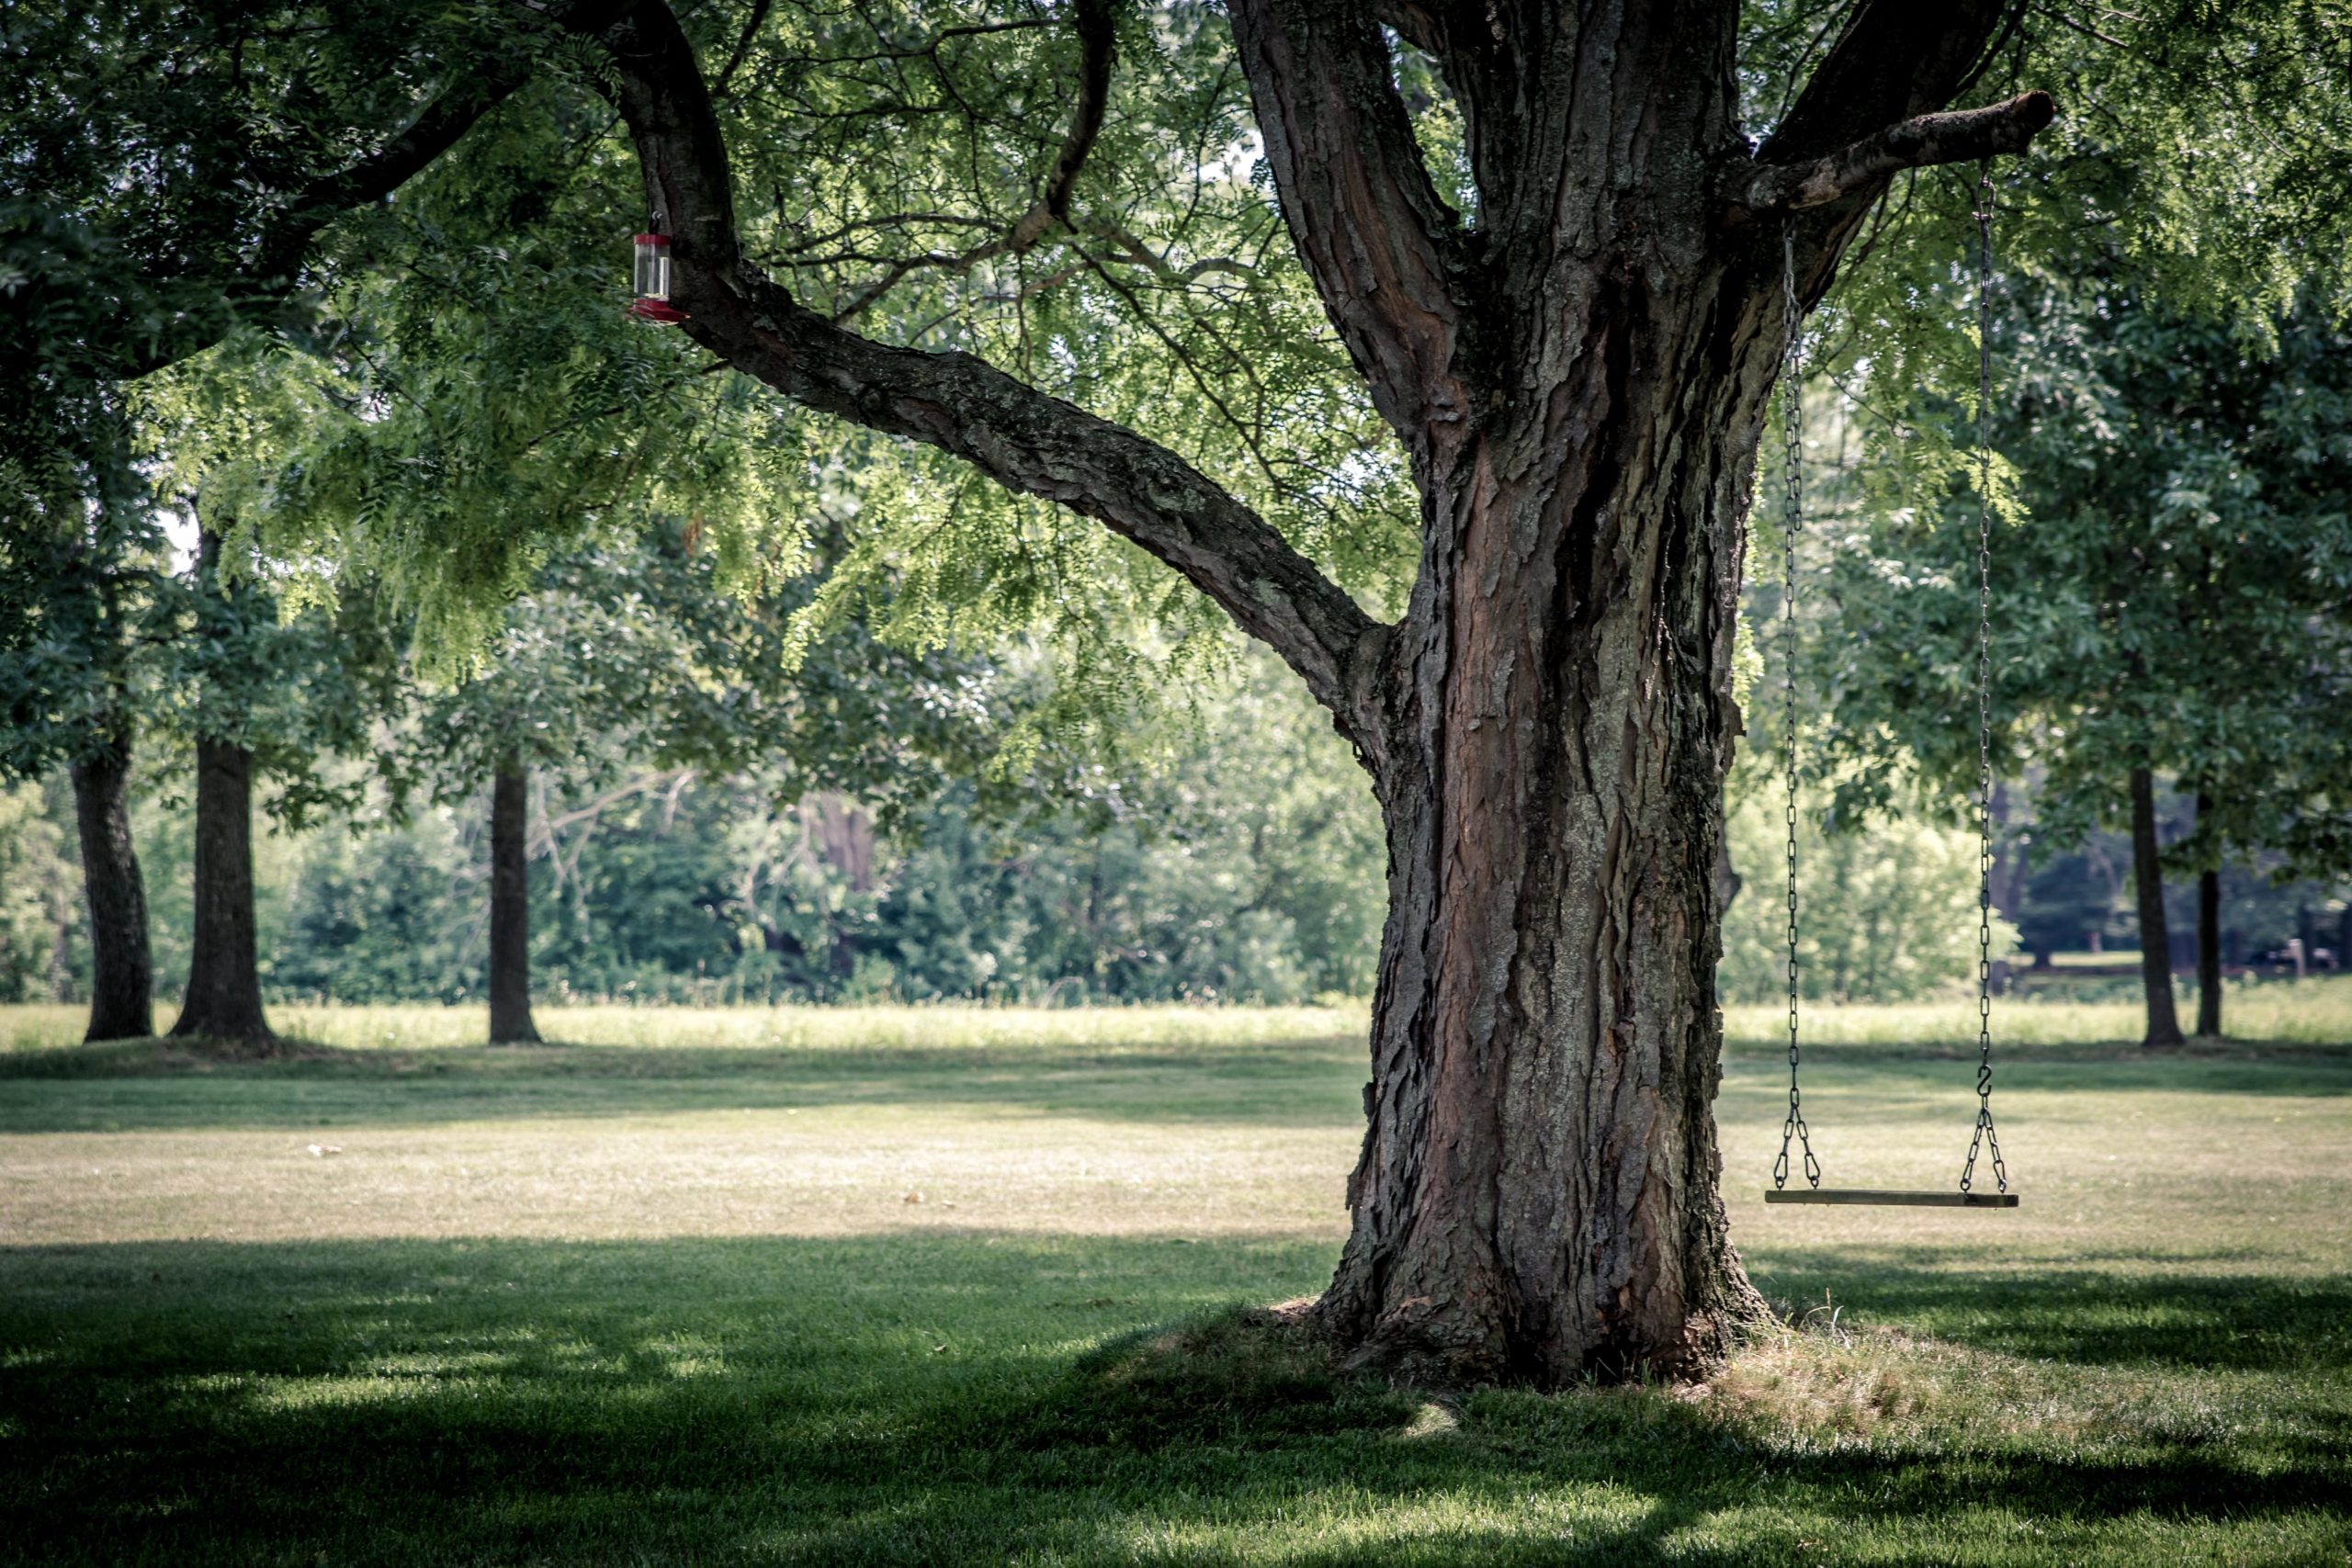 Tree Swing handing on an old tree in a park